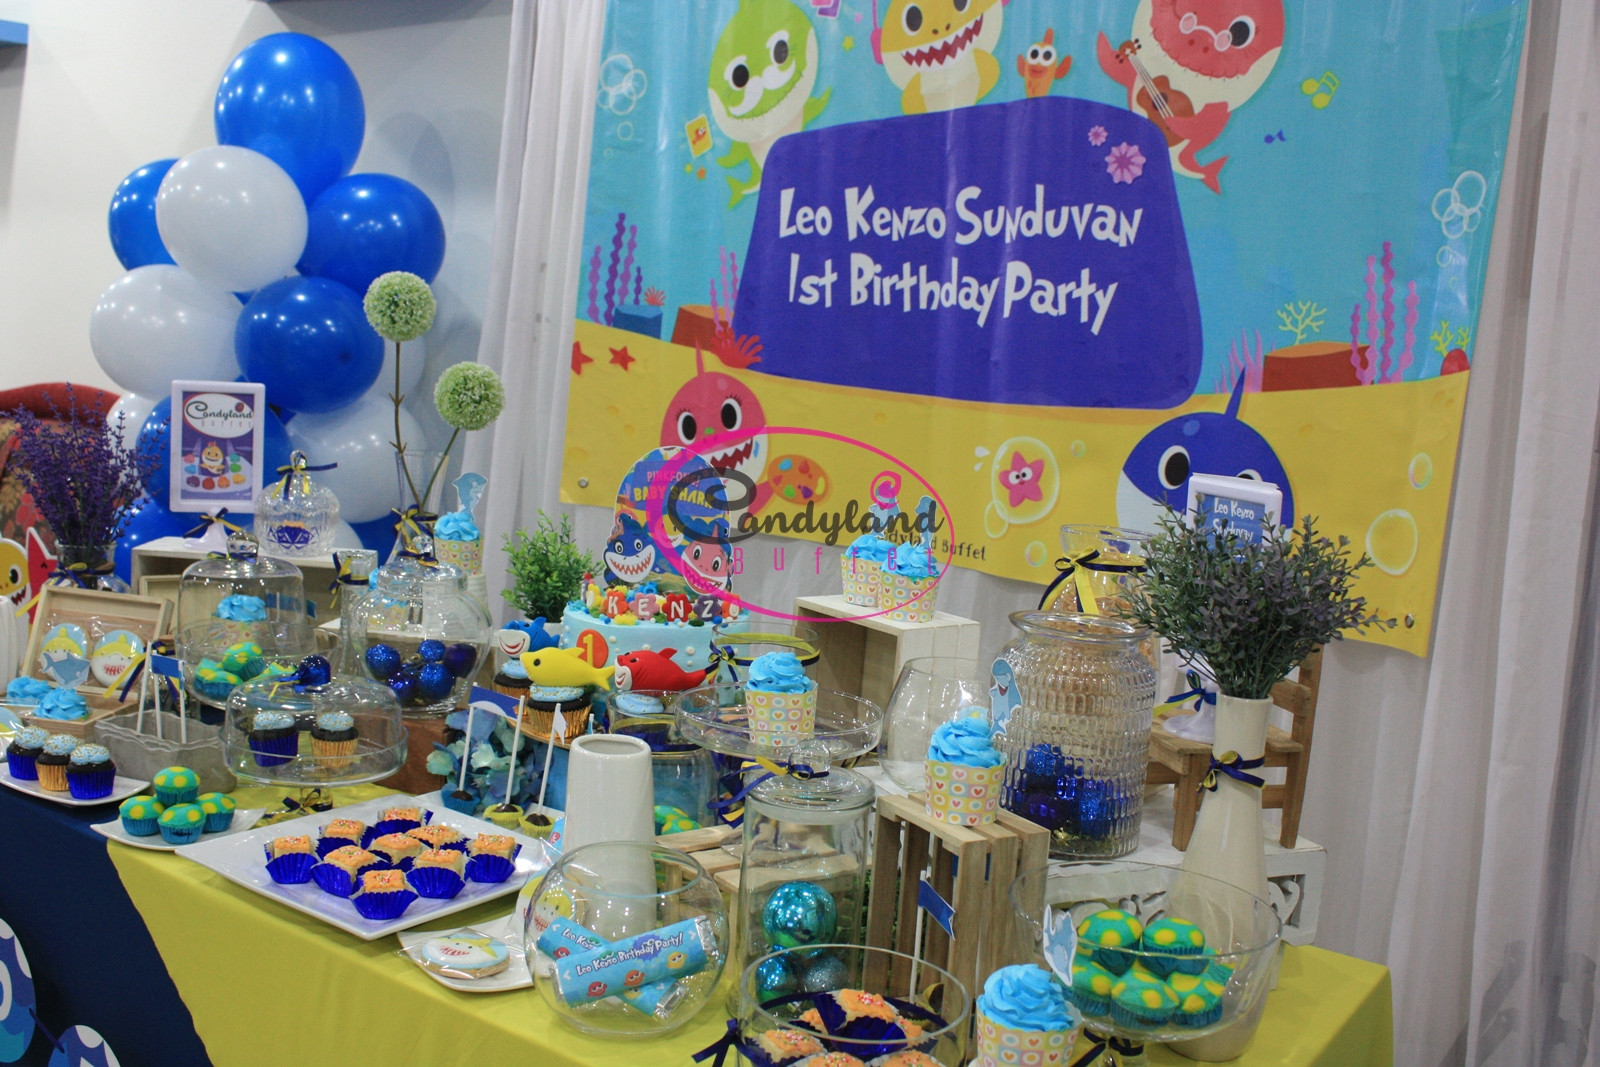 Baby Shark Party Supplies
 Candy Buffet Kota Kinabalu Sabah Baby Shark Birthday Theme